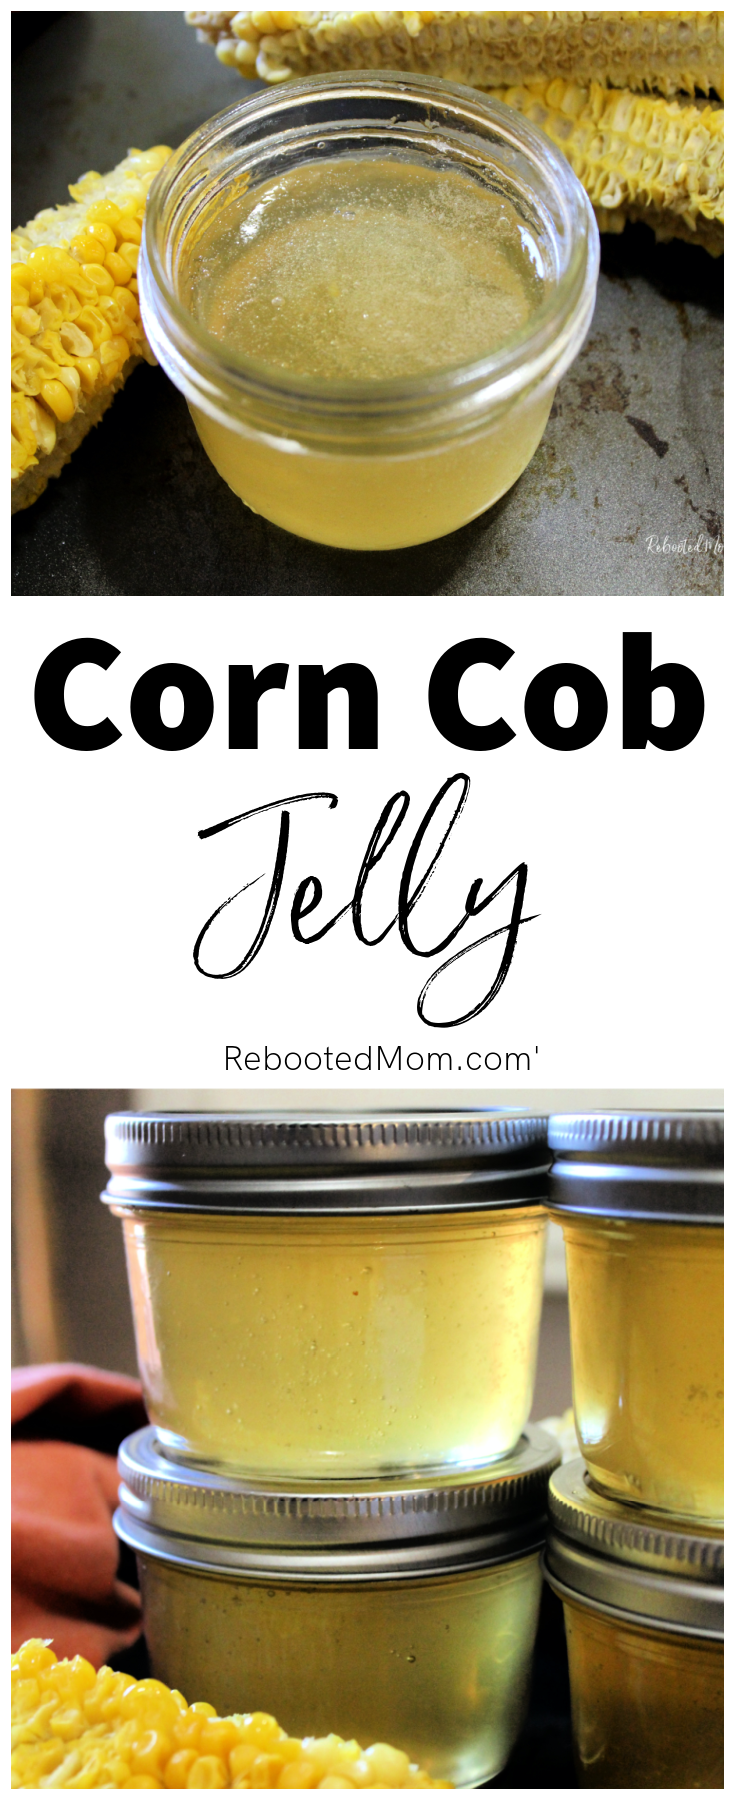 Corn Cob Jelly